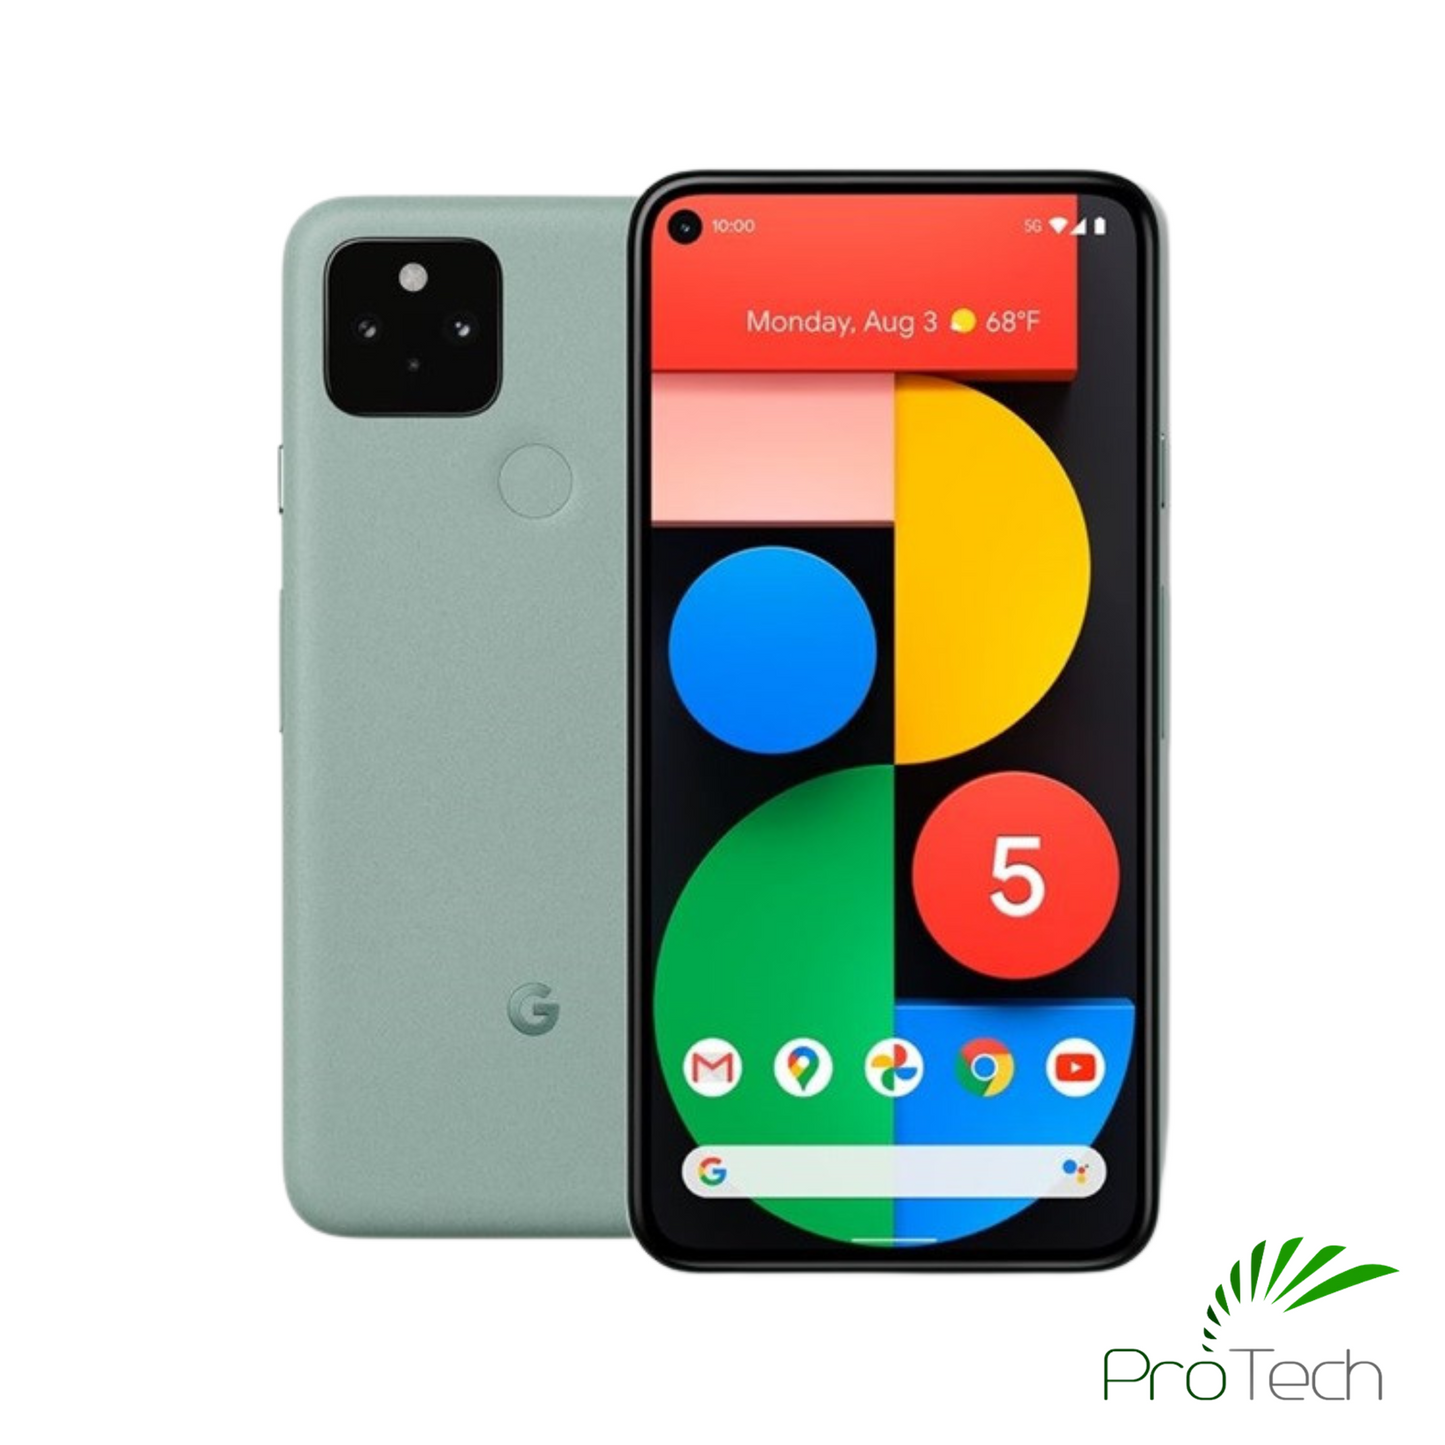 Google Pixel 5 5G | Green/Black |128GB